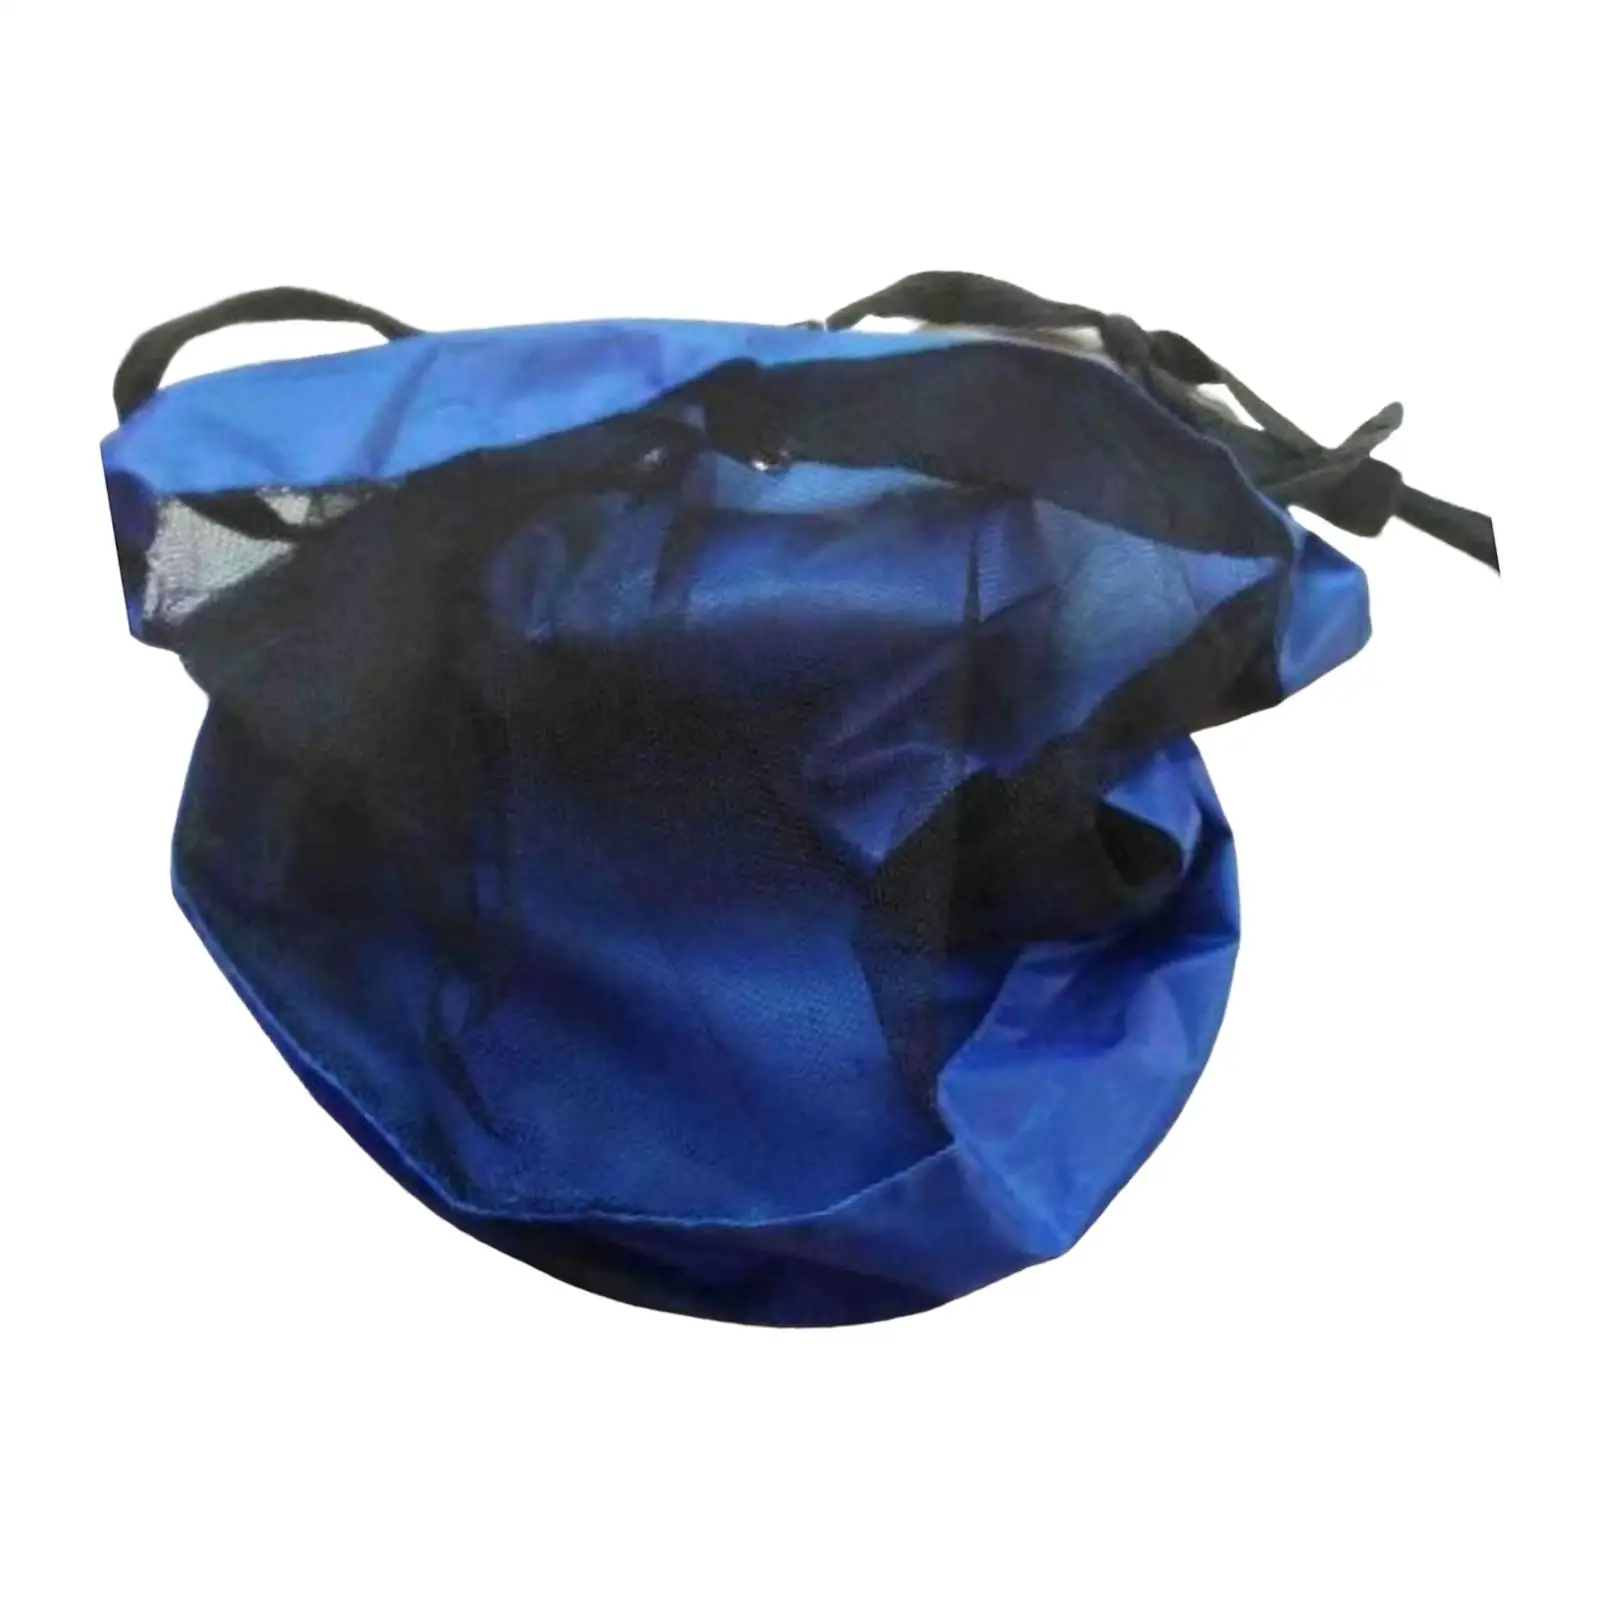 Basketball Backpack Adjustable Shoulder Straps Sackpack Ball Storage Bag for Volleyball Basketball Rugby Ball Soccer